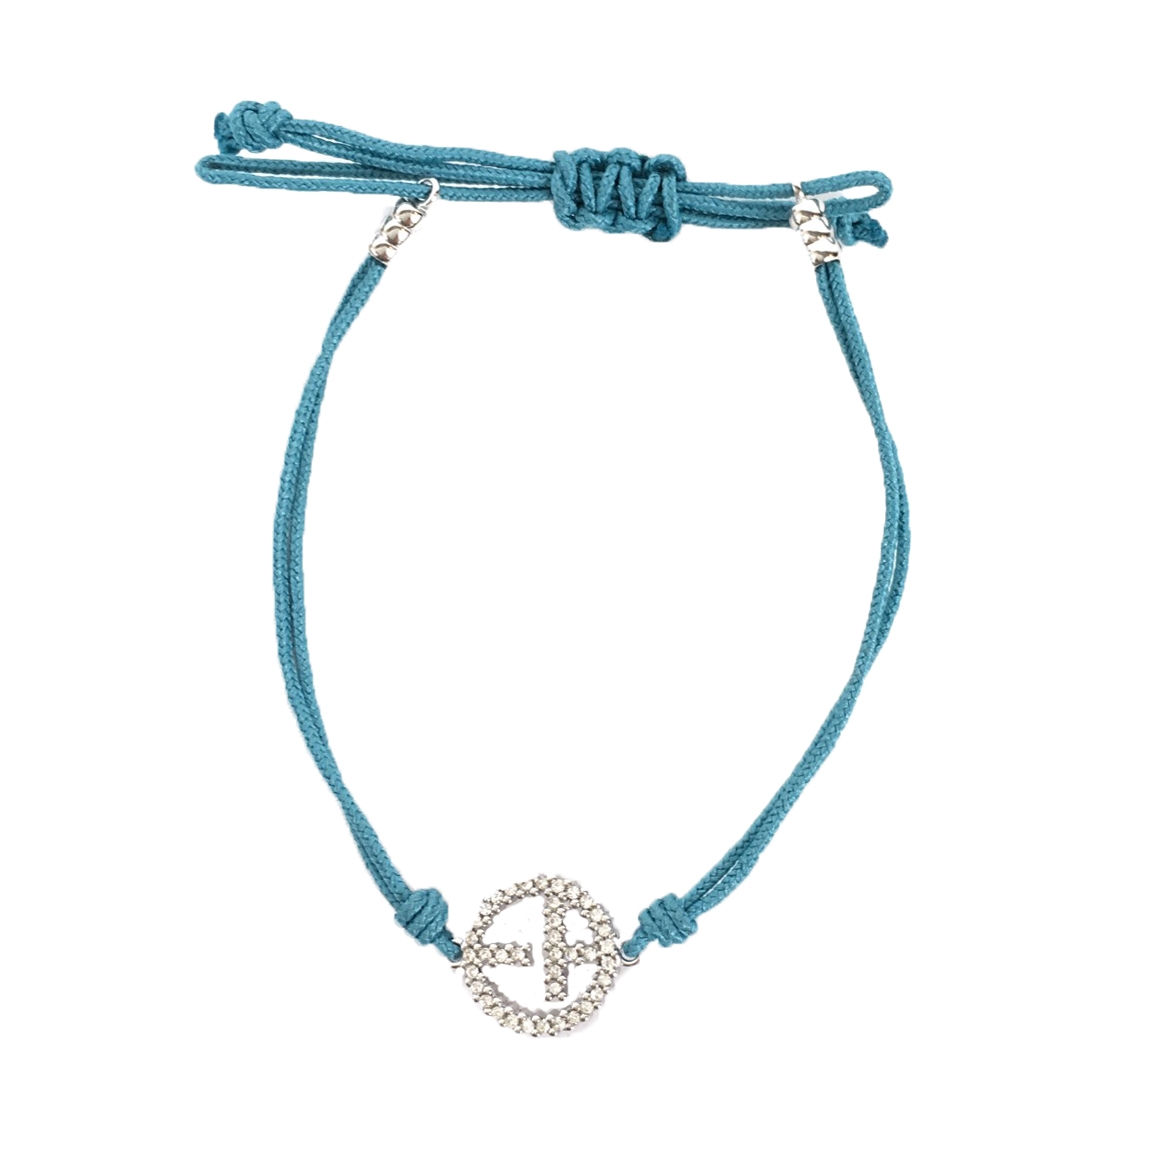 Silver Mountain Indigo | Pura vida bracelets, Silver, Blue bracelet